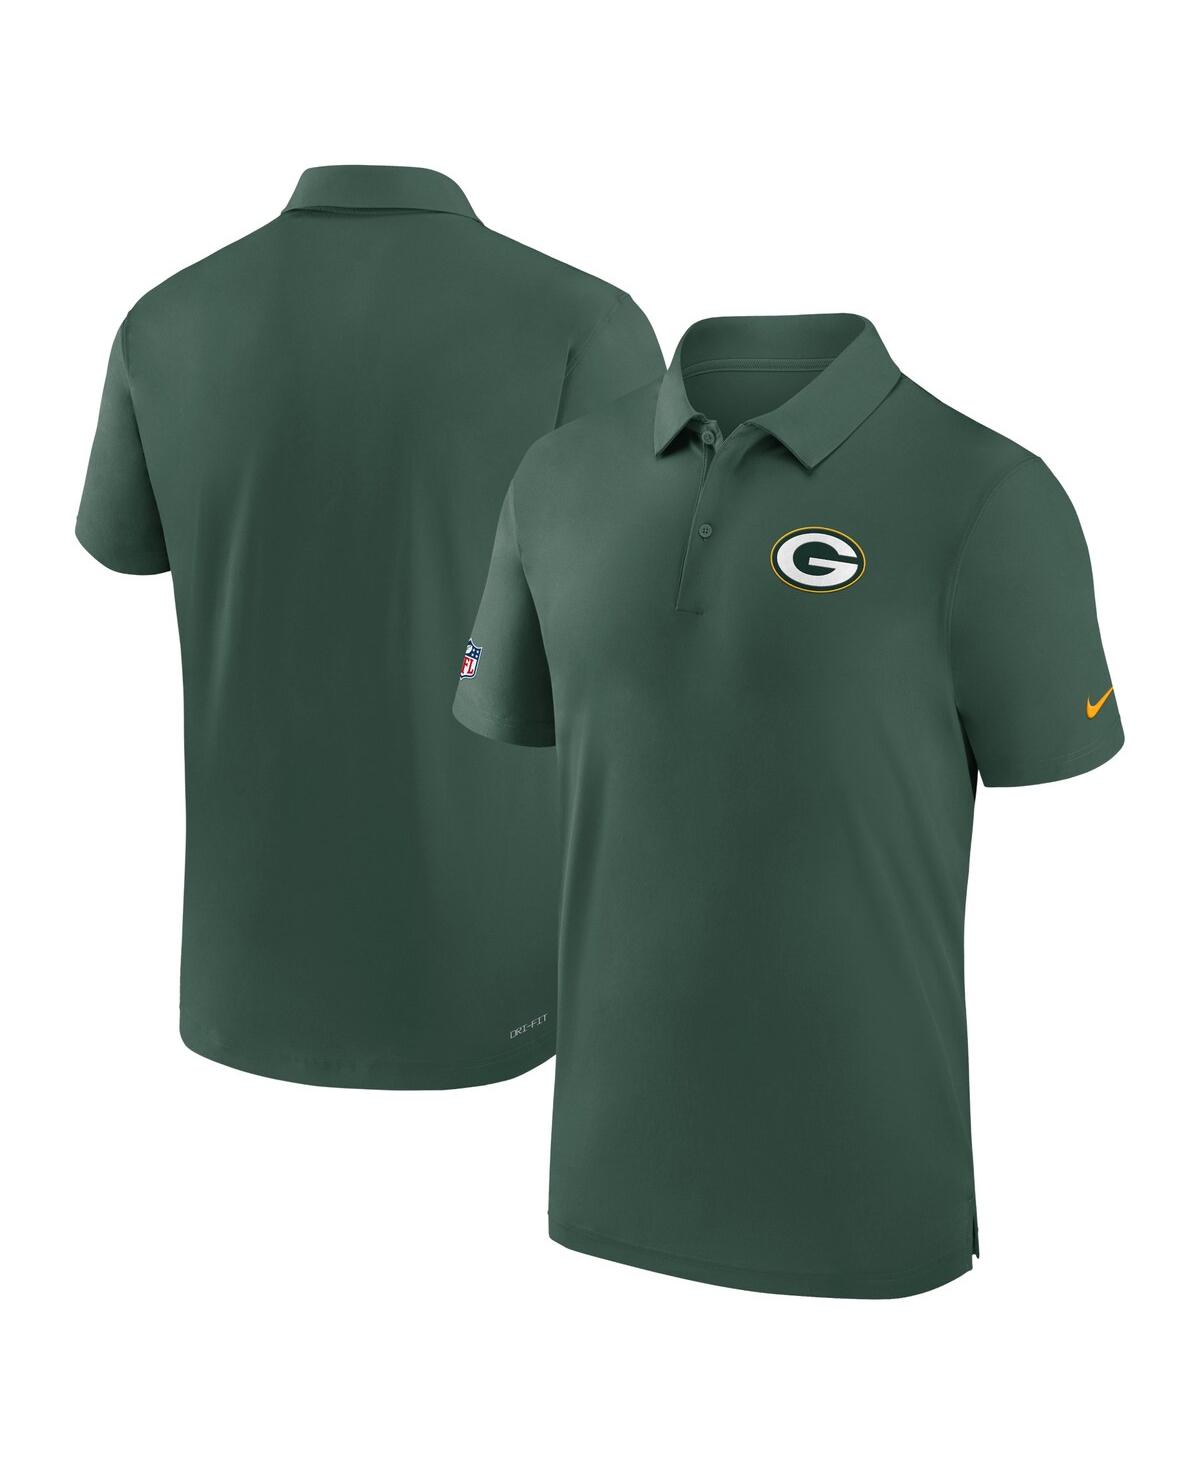 Shop Nike Men's  Green Green Bay Packers Sideline Coaches Performance Polo Shirt